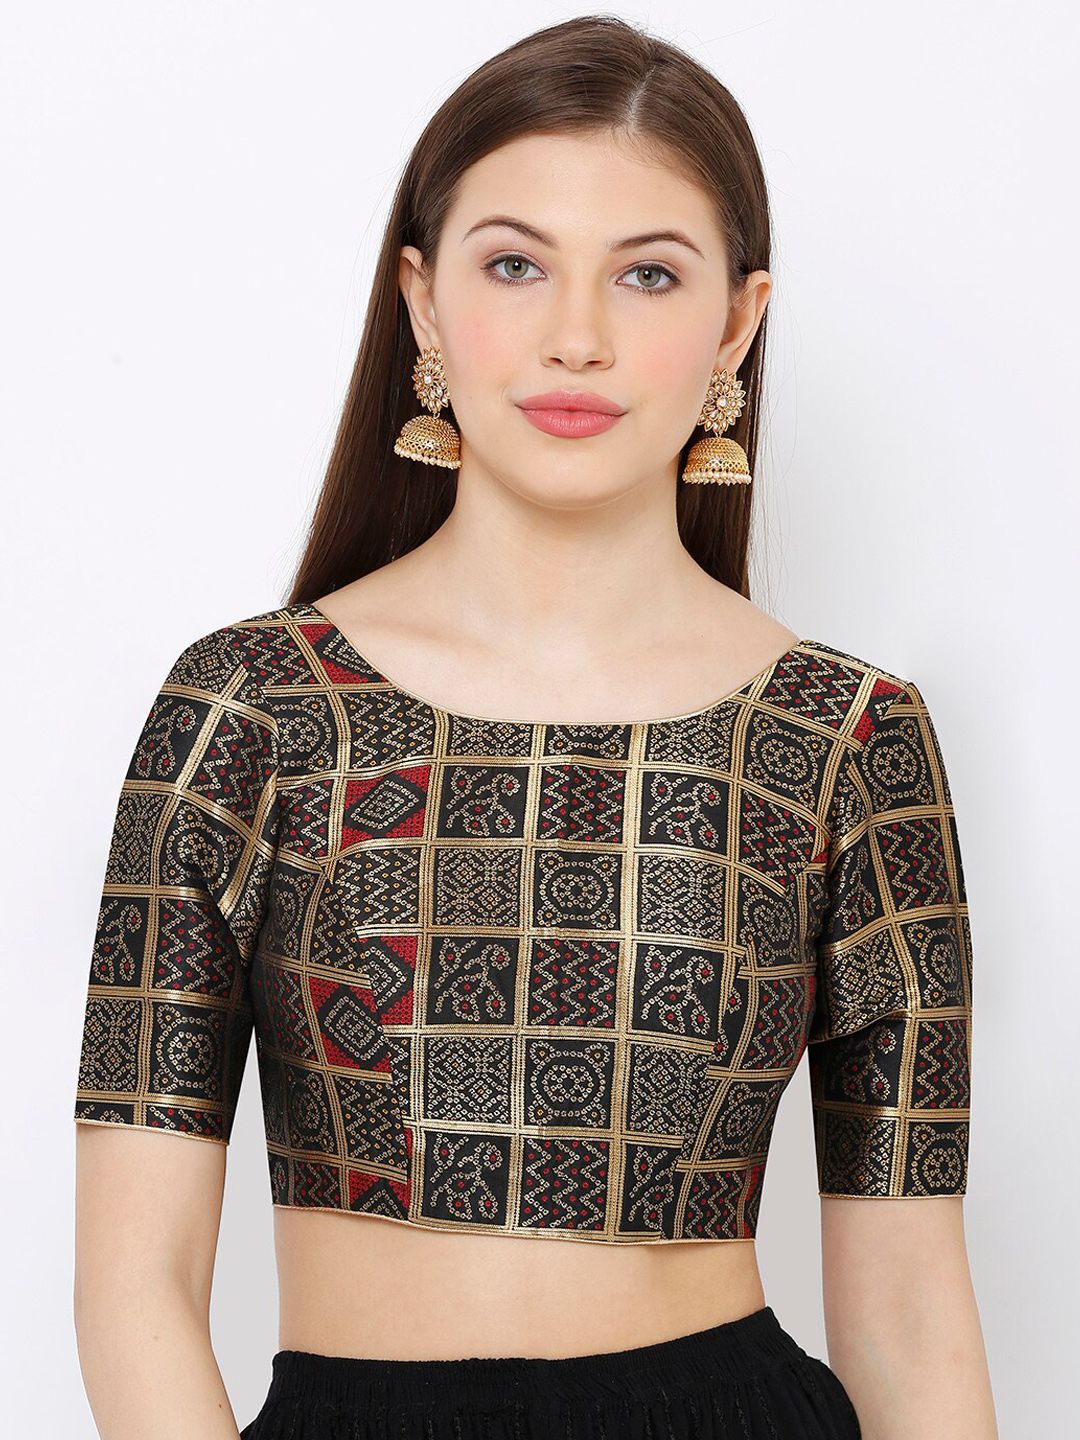 SALWAR STUDIO Women Black & Gold-Colored Woven Design Readymade Saree Blouse Price in India